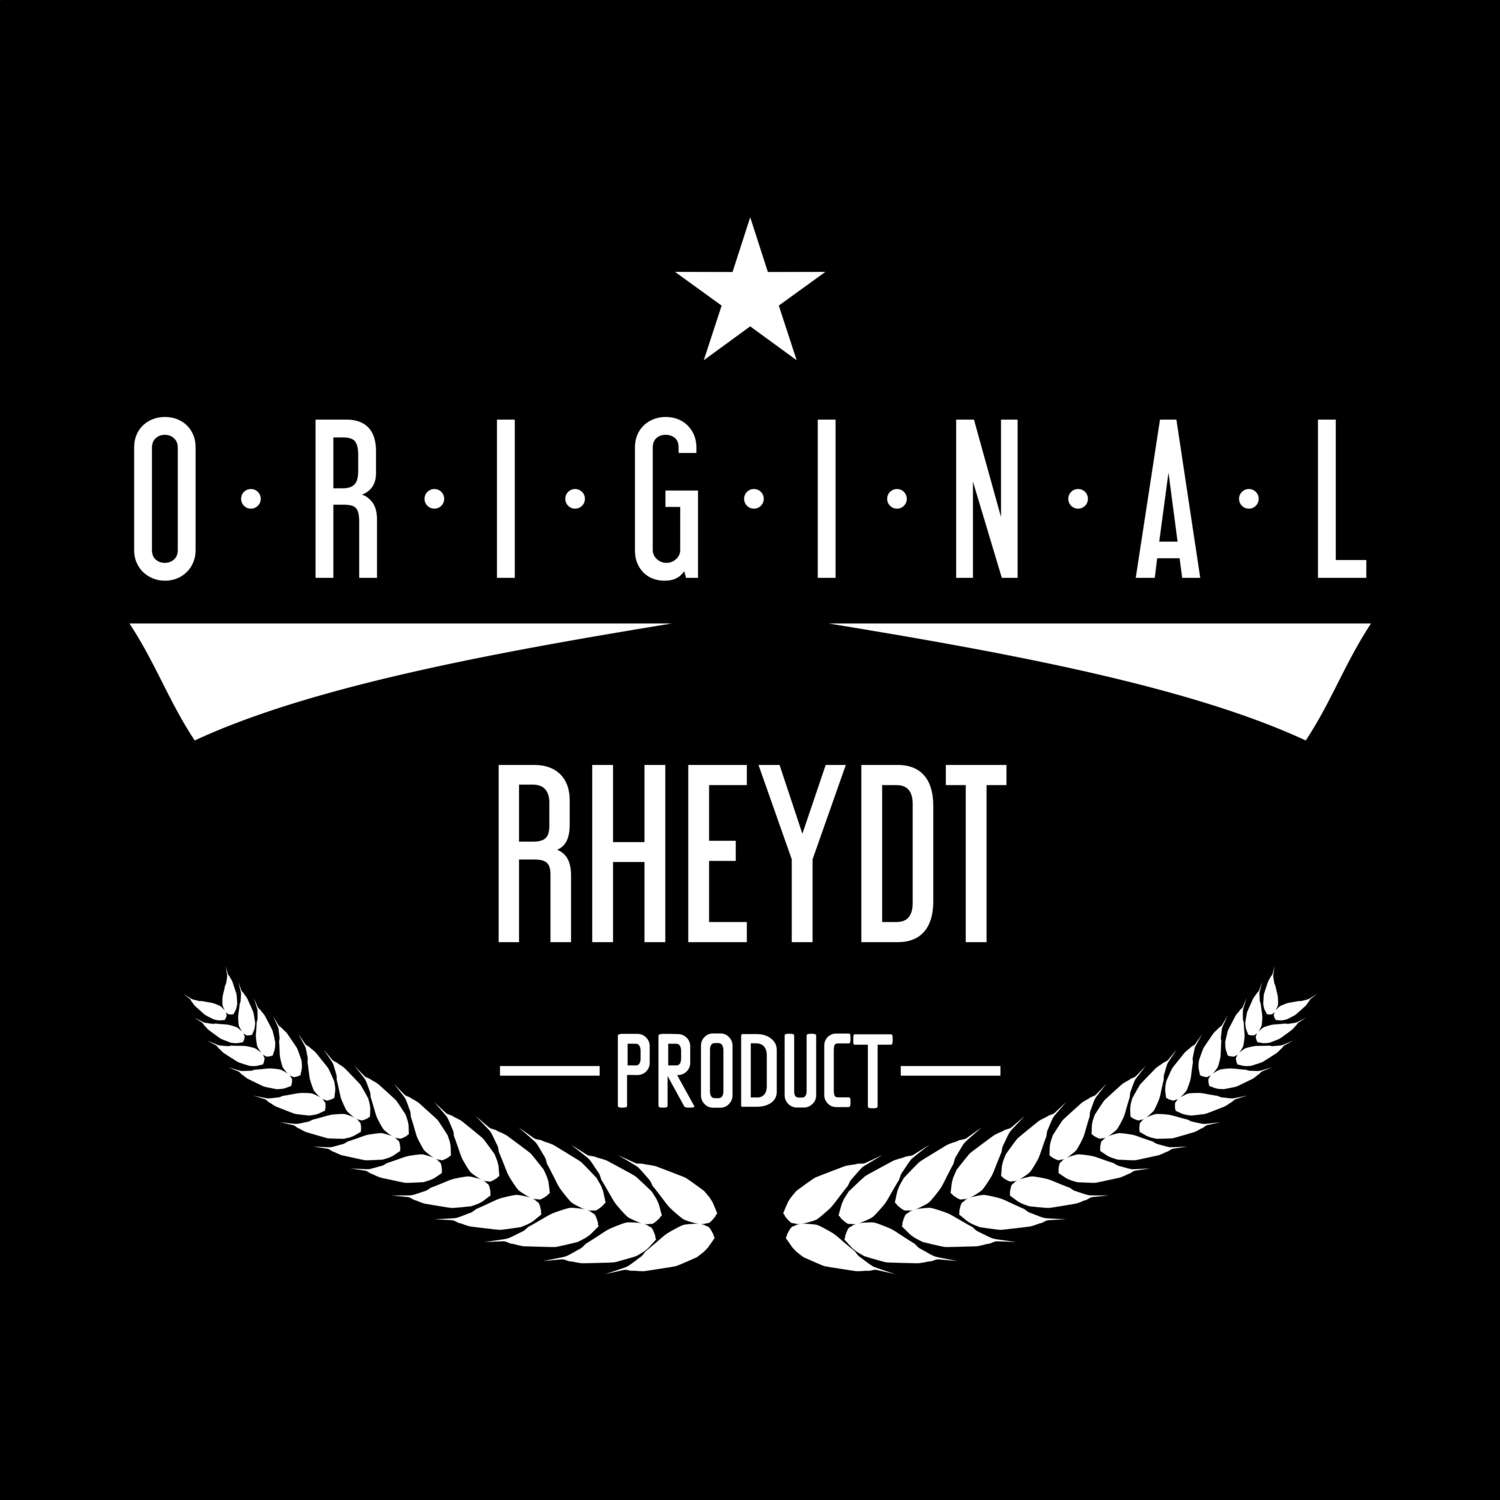 Rheydt T-Shirt »Original Product«